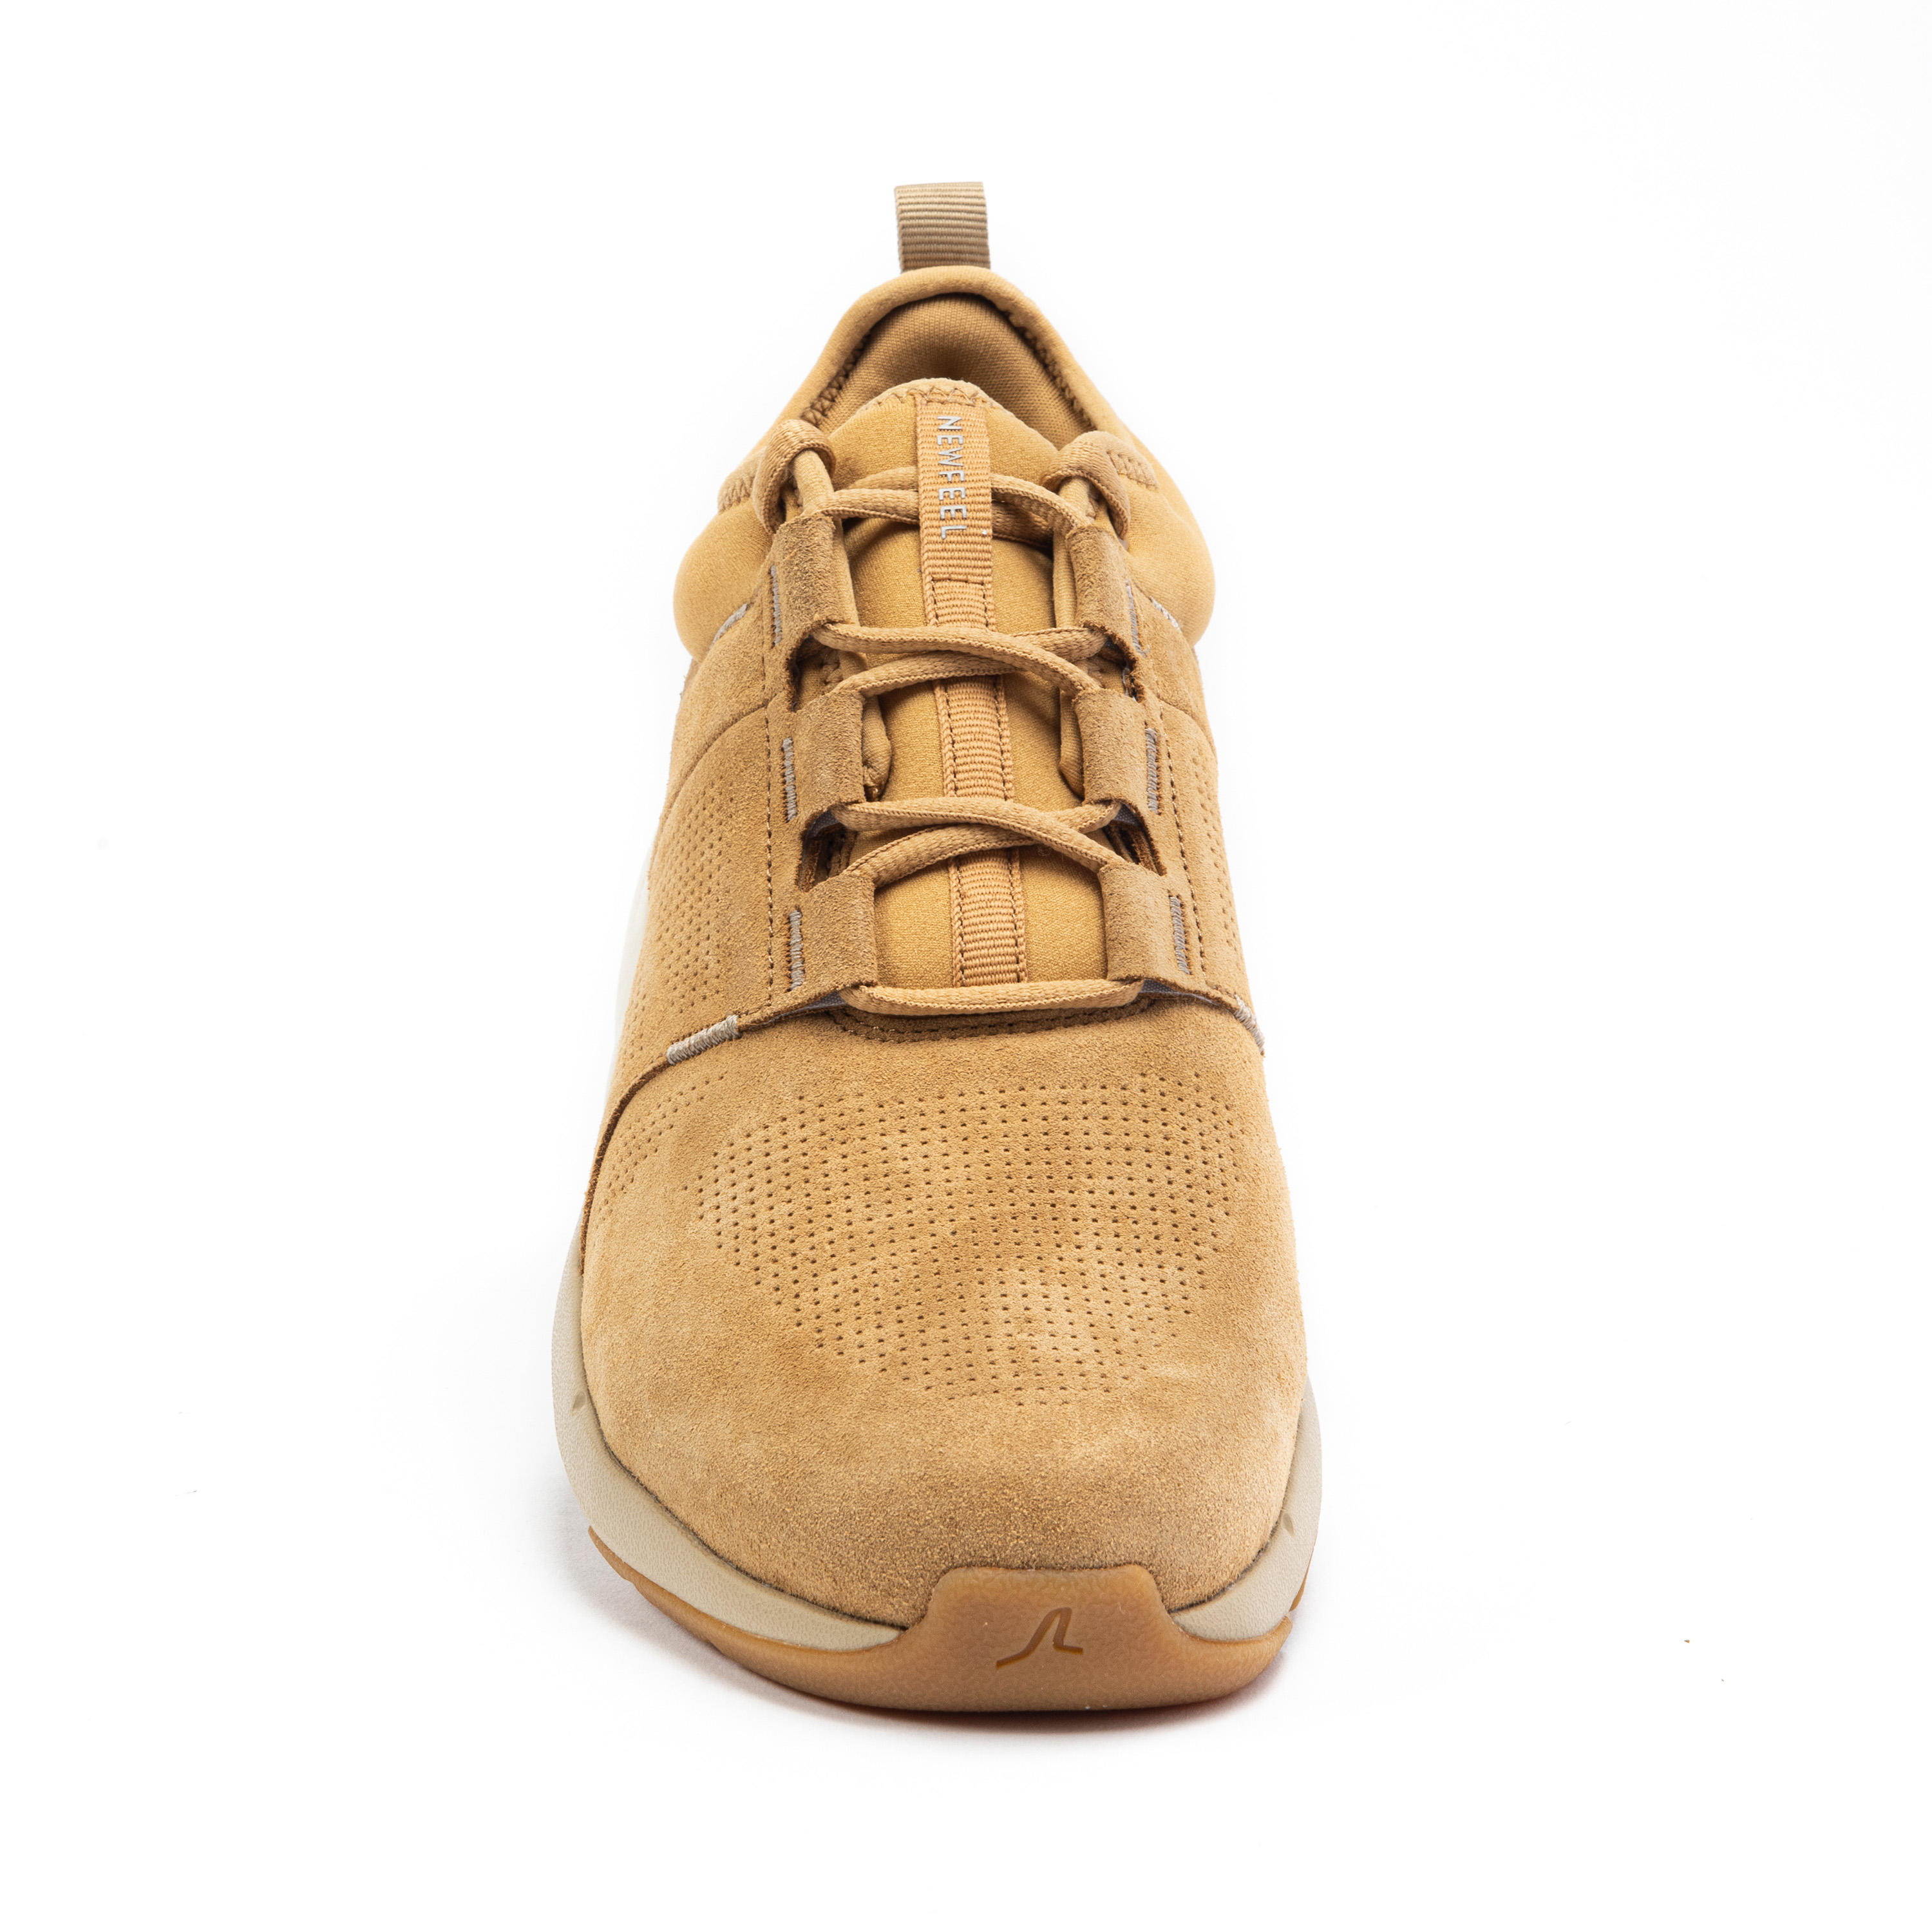 Actiwalk Comfort Leather Men's Urban Walking Shoes - Camel 28/43